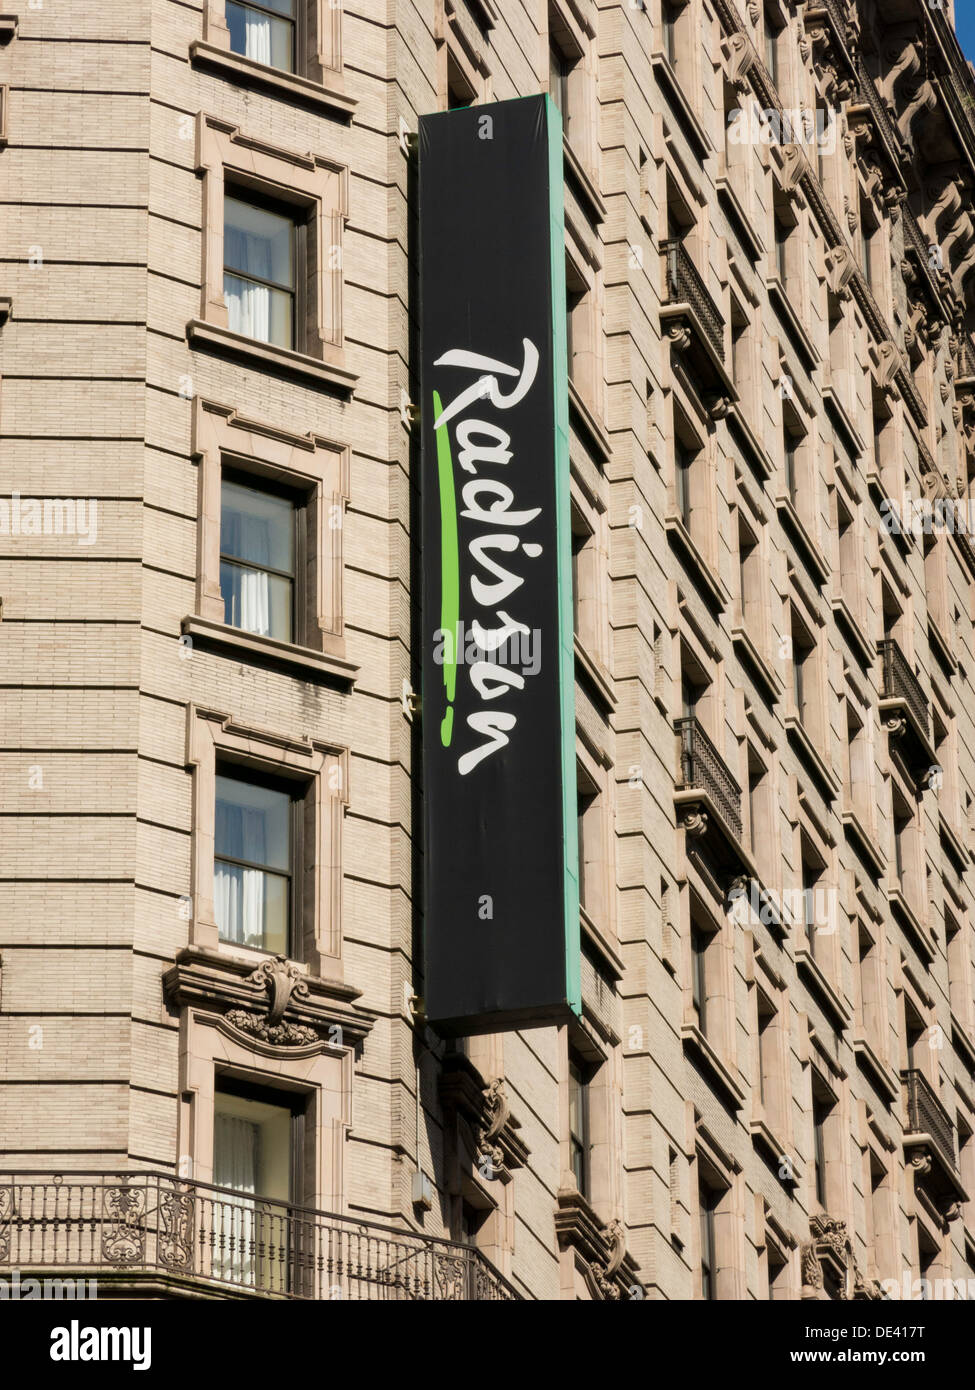 The Radisson Martinique Hotel Facade in New York City Stock Photo